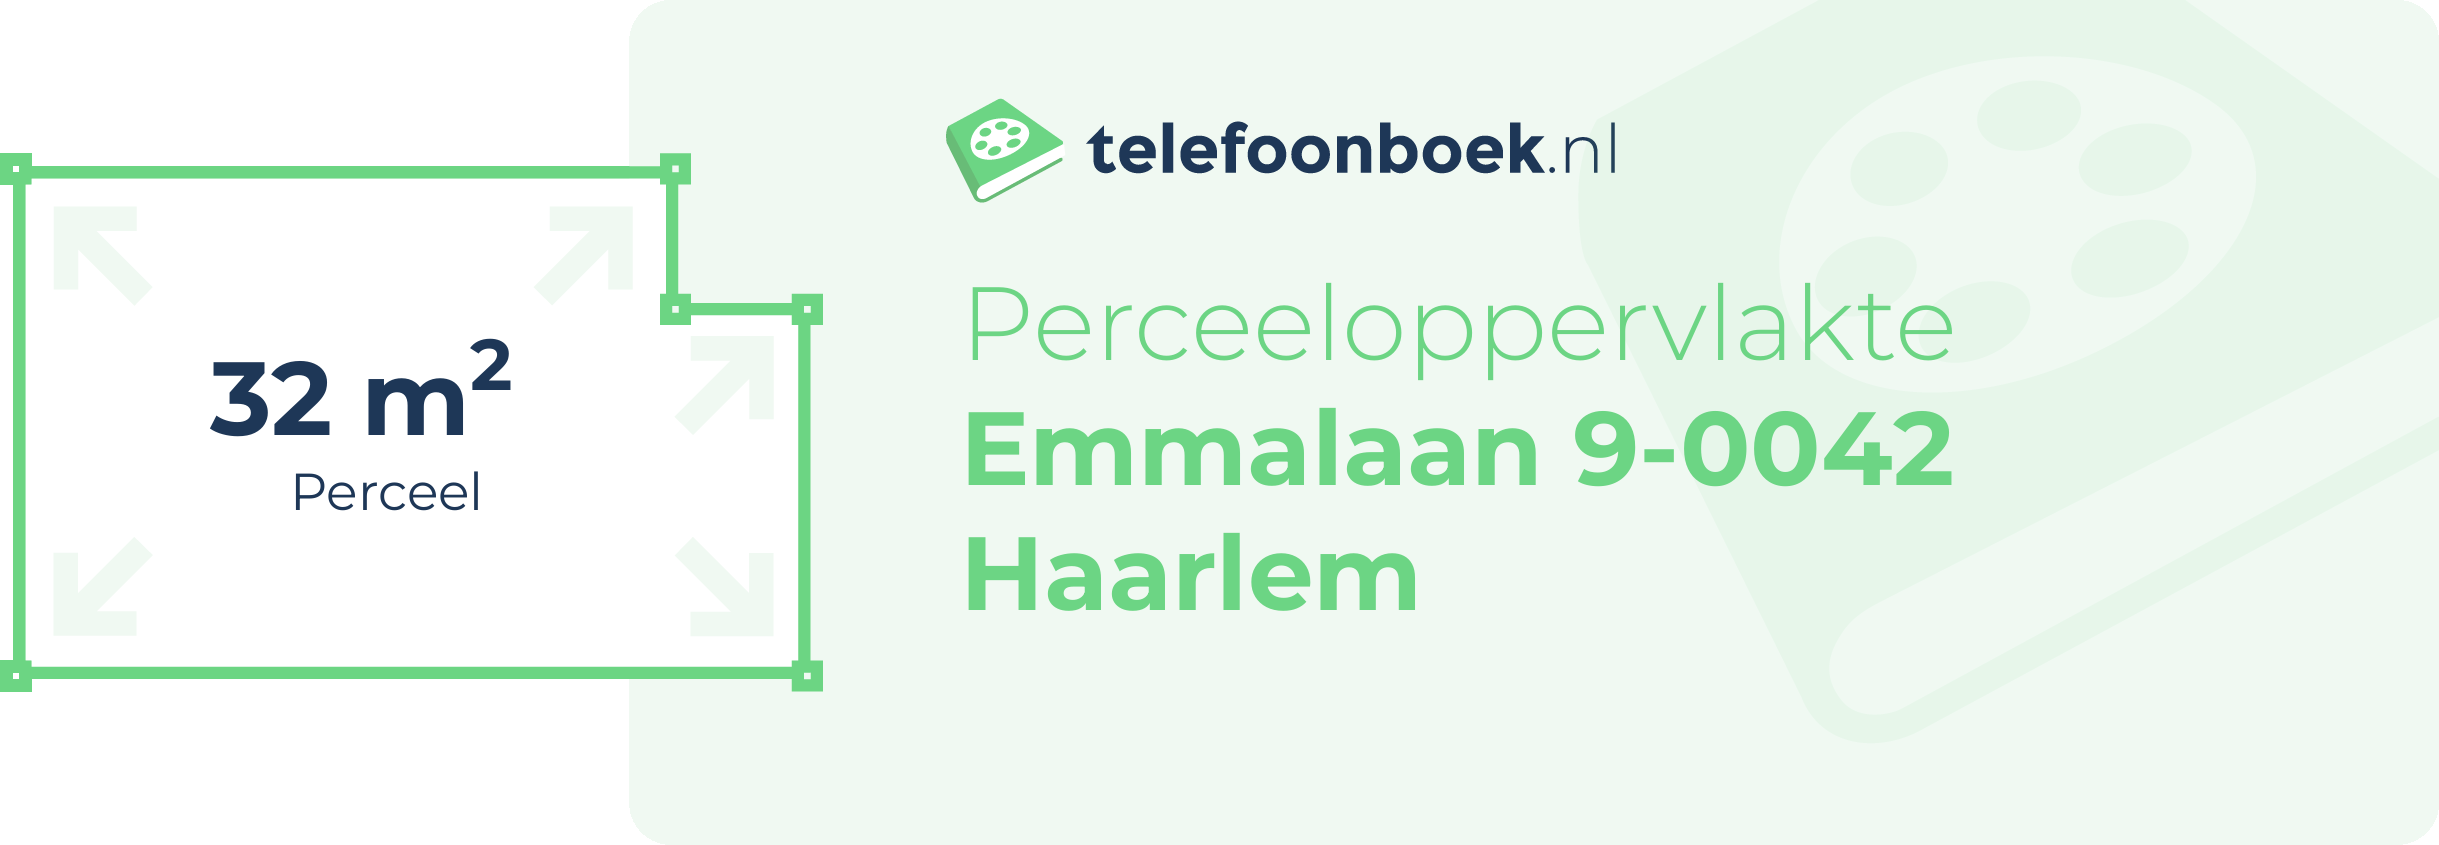 Perceeloppervlakte Emmalaan 9-0042 Haarlem